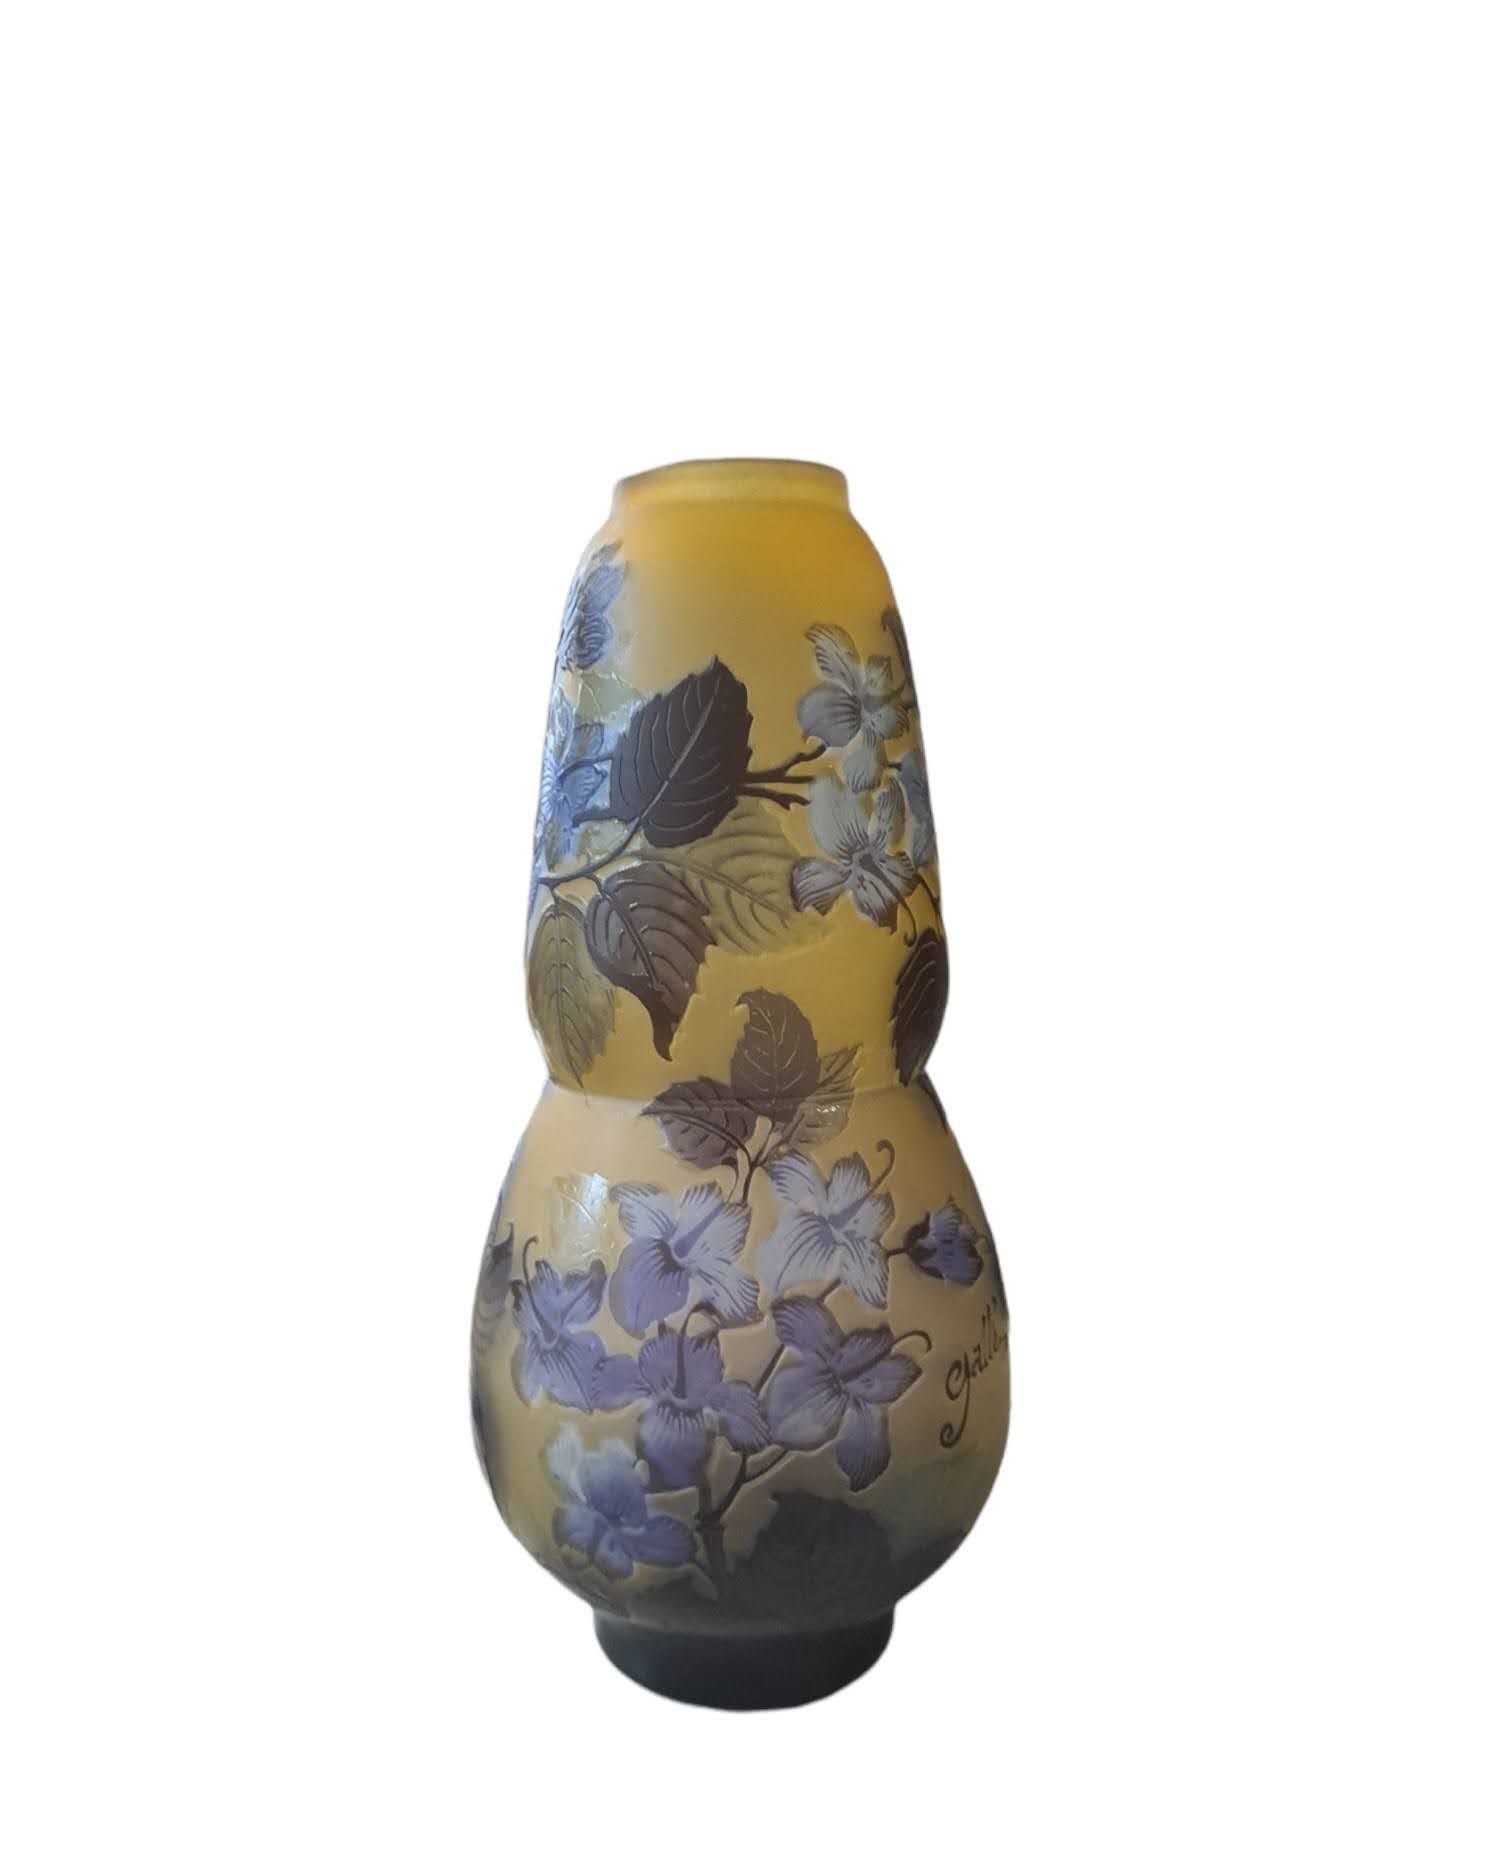 Null GALLE (在品尝)

多层玻璃制成的双面花瓶，在黄色背景上装饰有铃兰花。

承担了一个签名。

H.24厘米